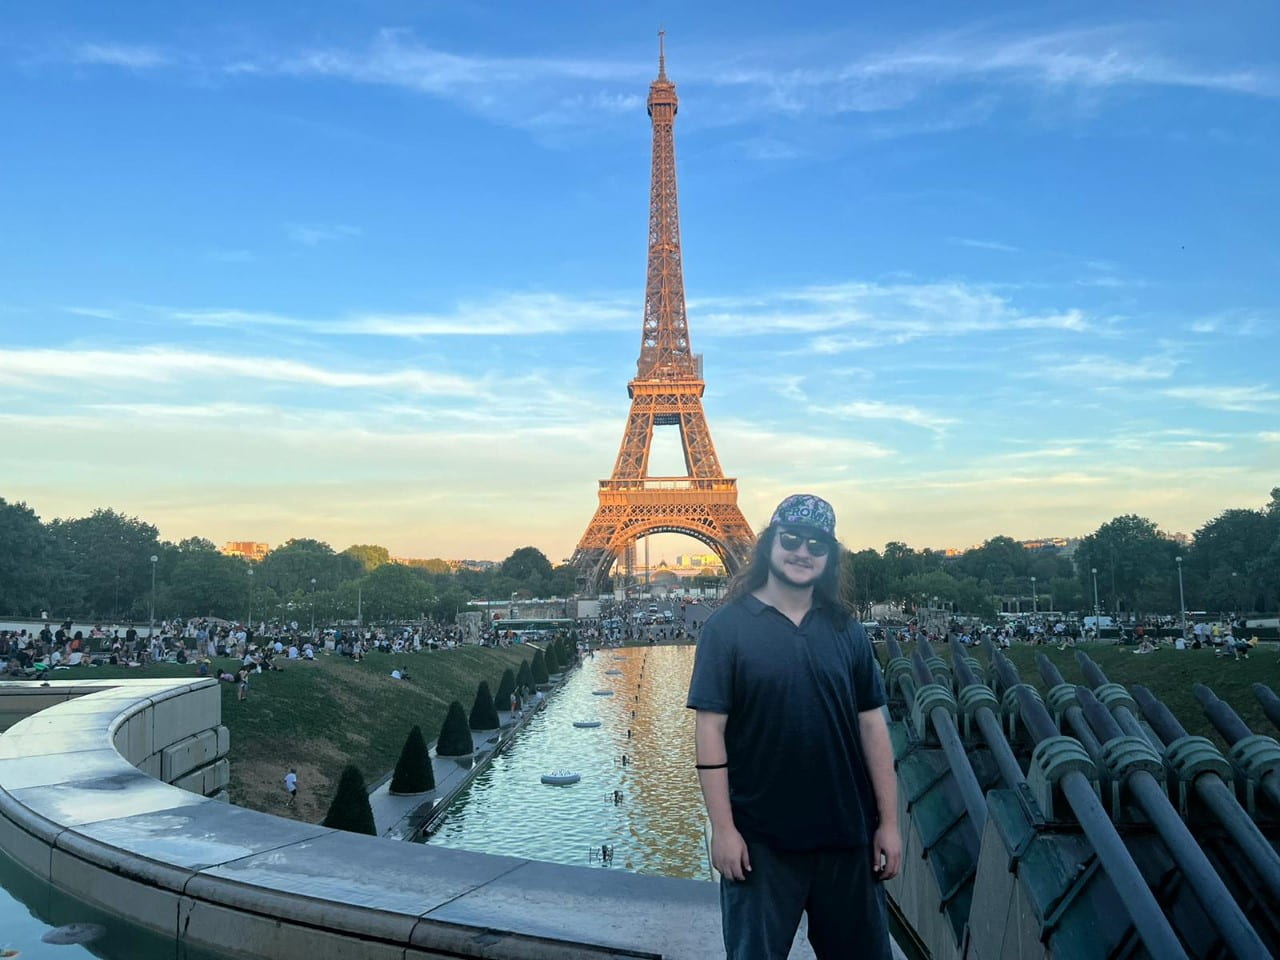 SISRM fellow Adam D. posing in front of the Eiffel Tower.